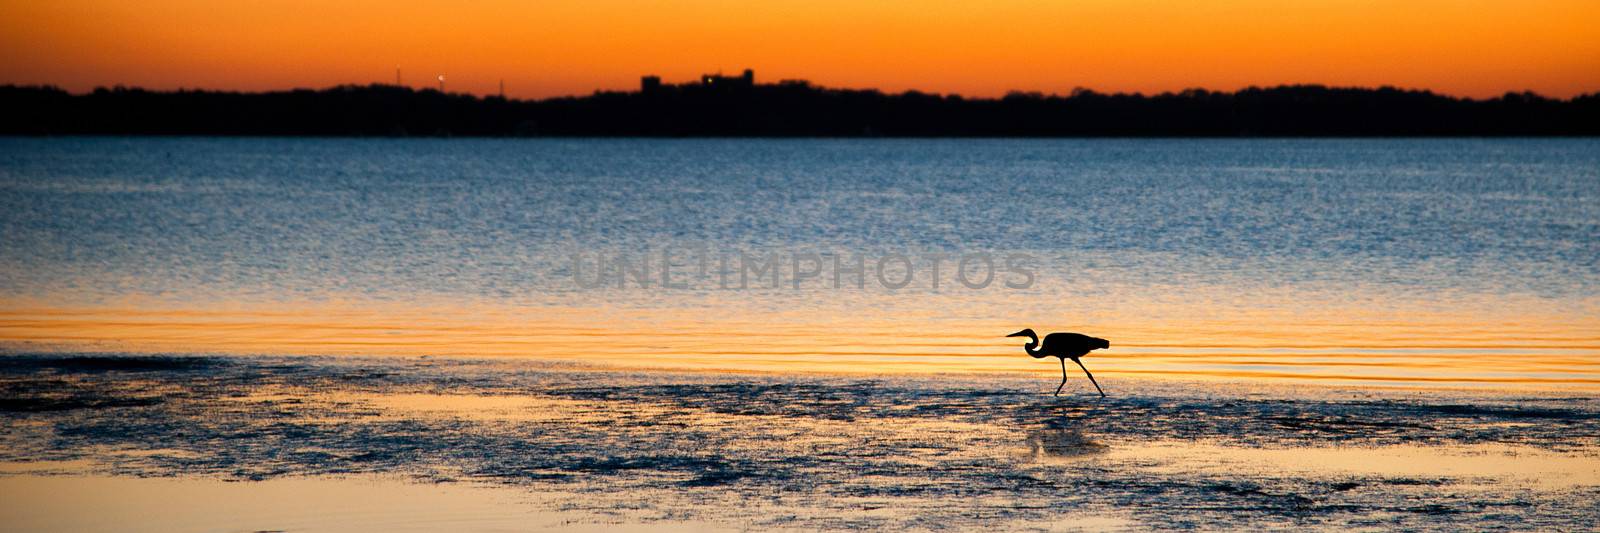 Bird on beach at sunset by CelsoDiniz